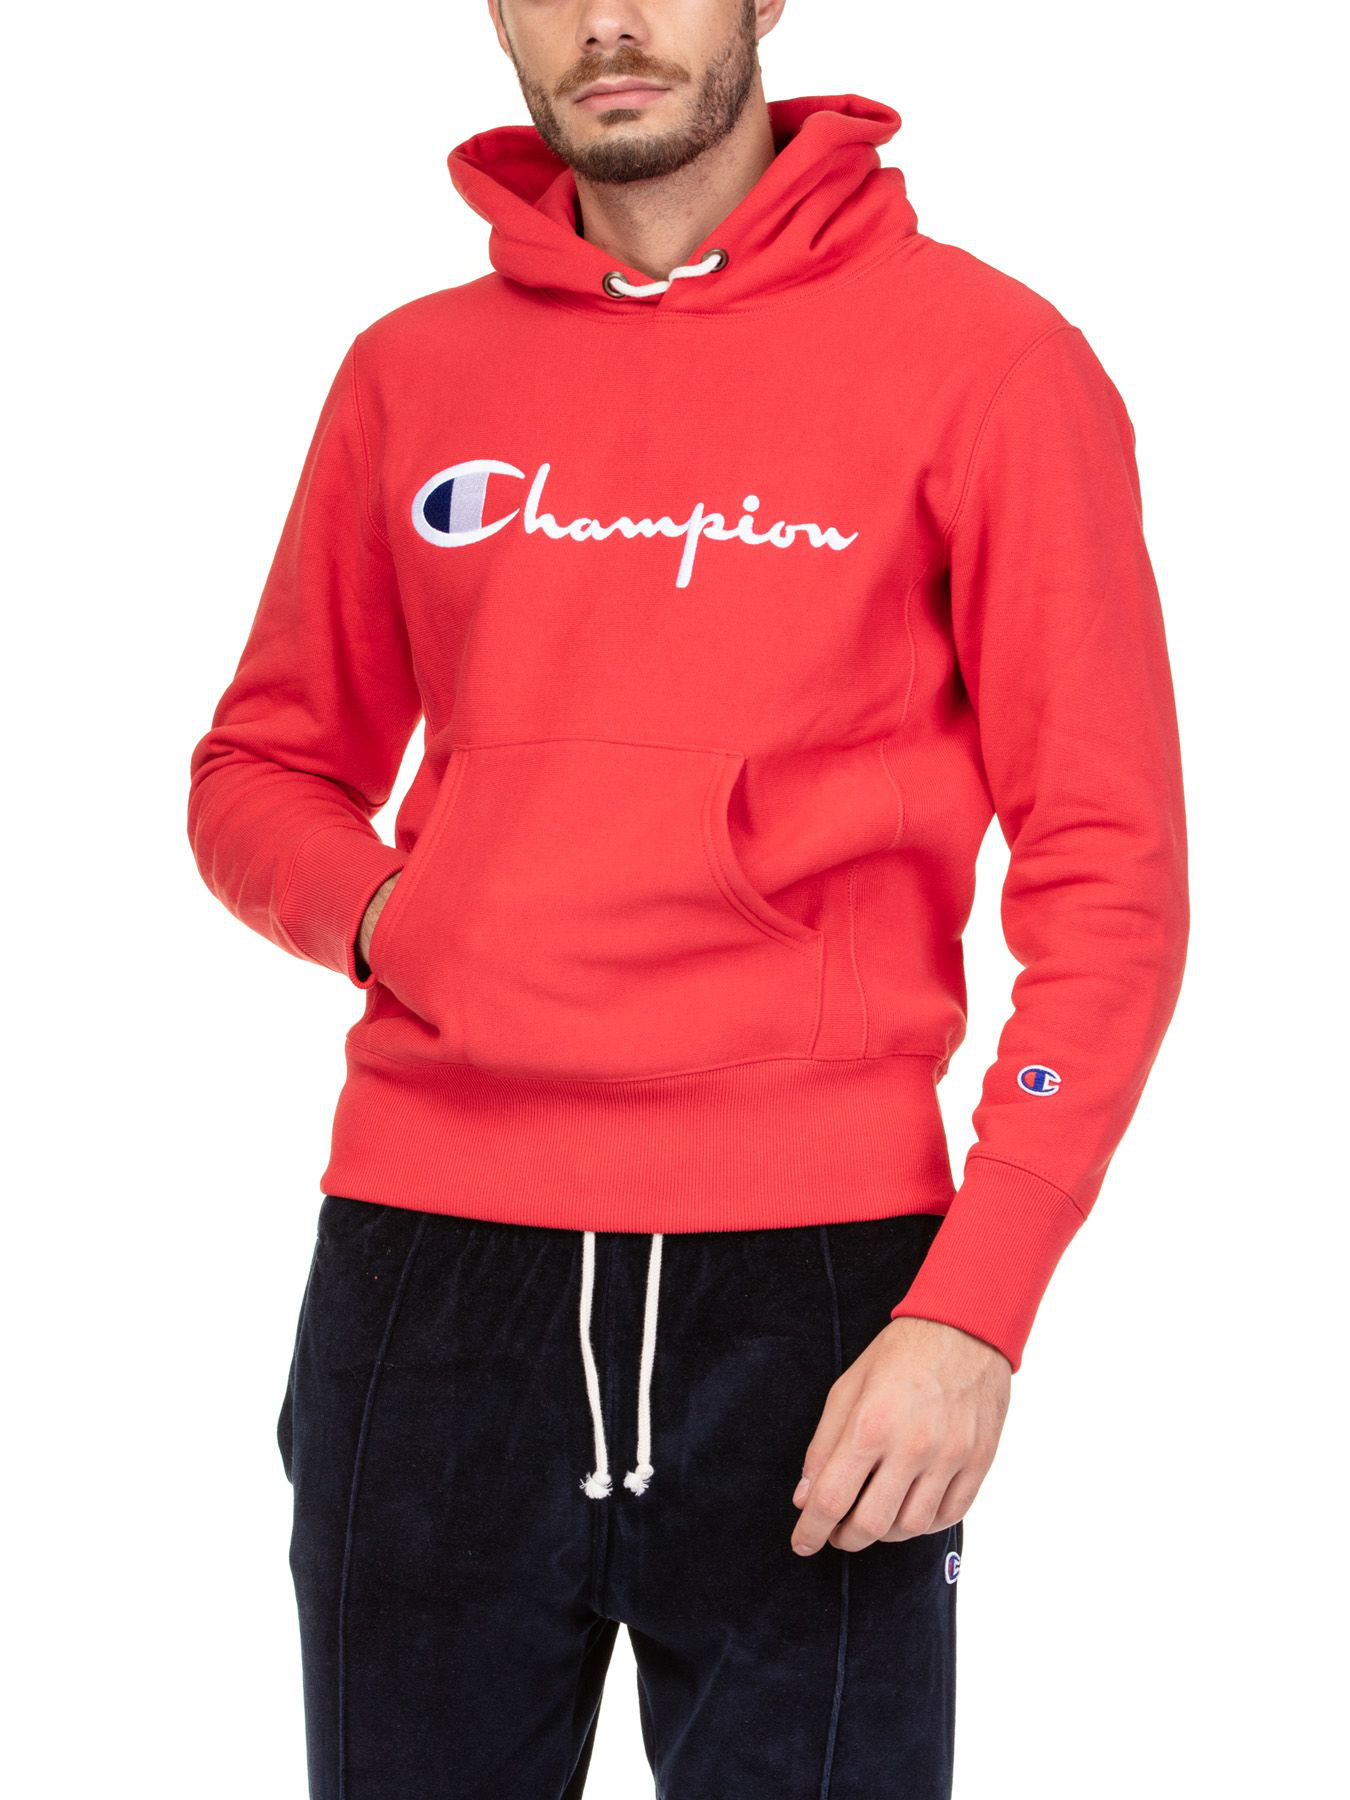 champion red white and blue sweatshirt